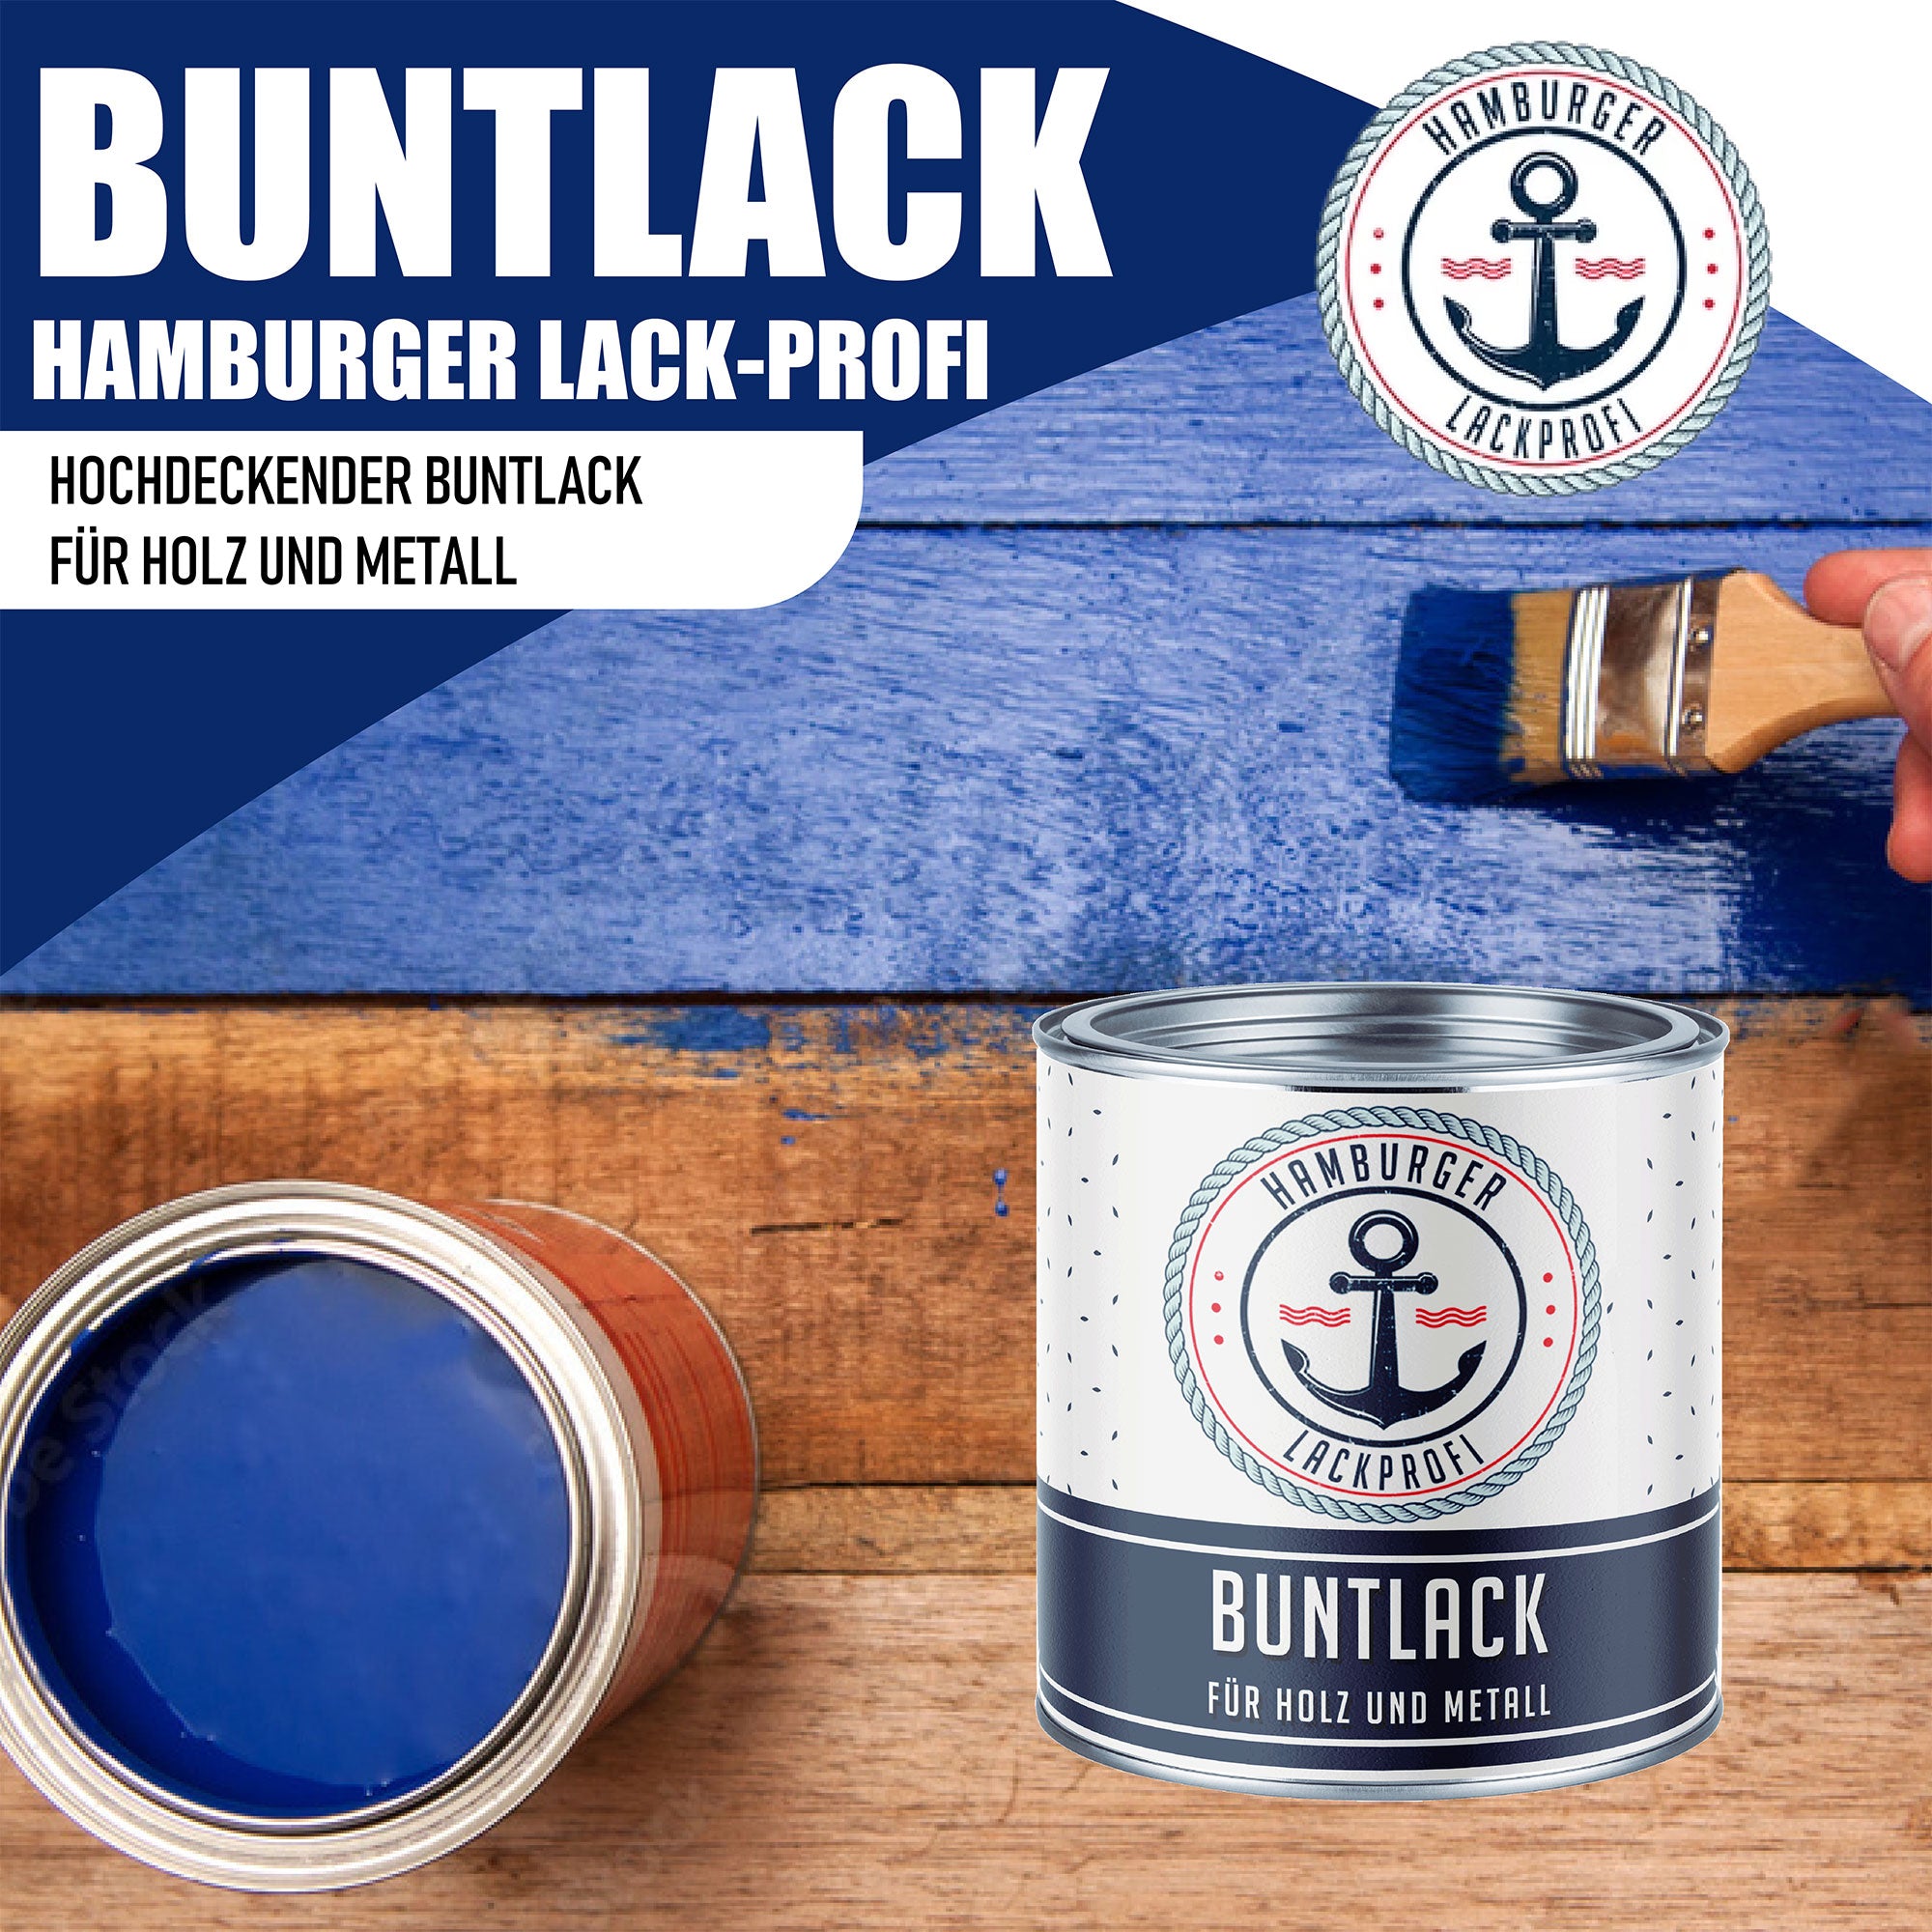 Hamburger Lack-Profi Buntlack Karminrot RAL 3002 - Robuster Kunstharzlack